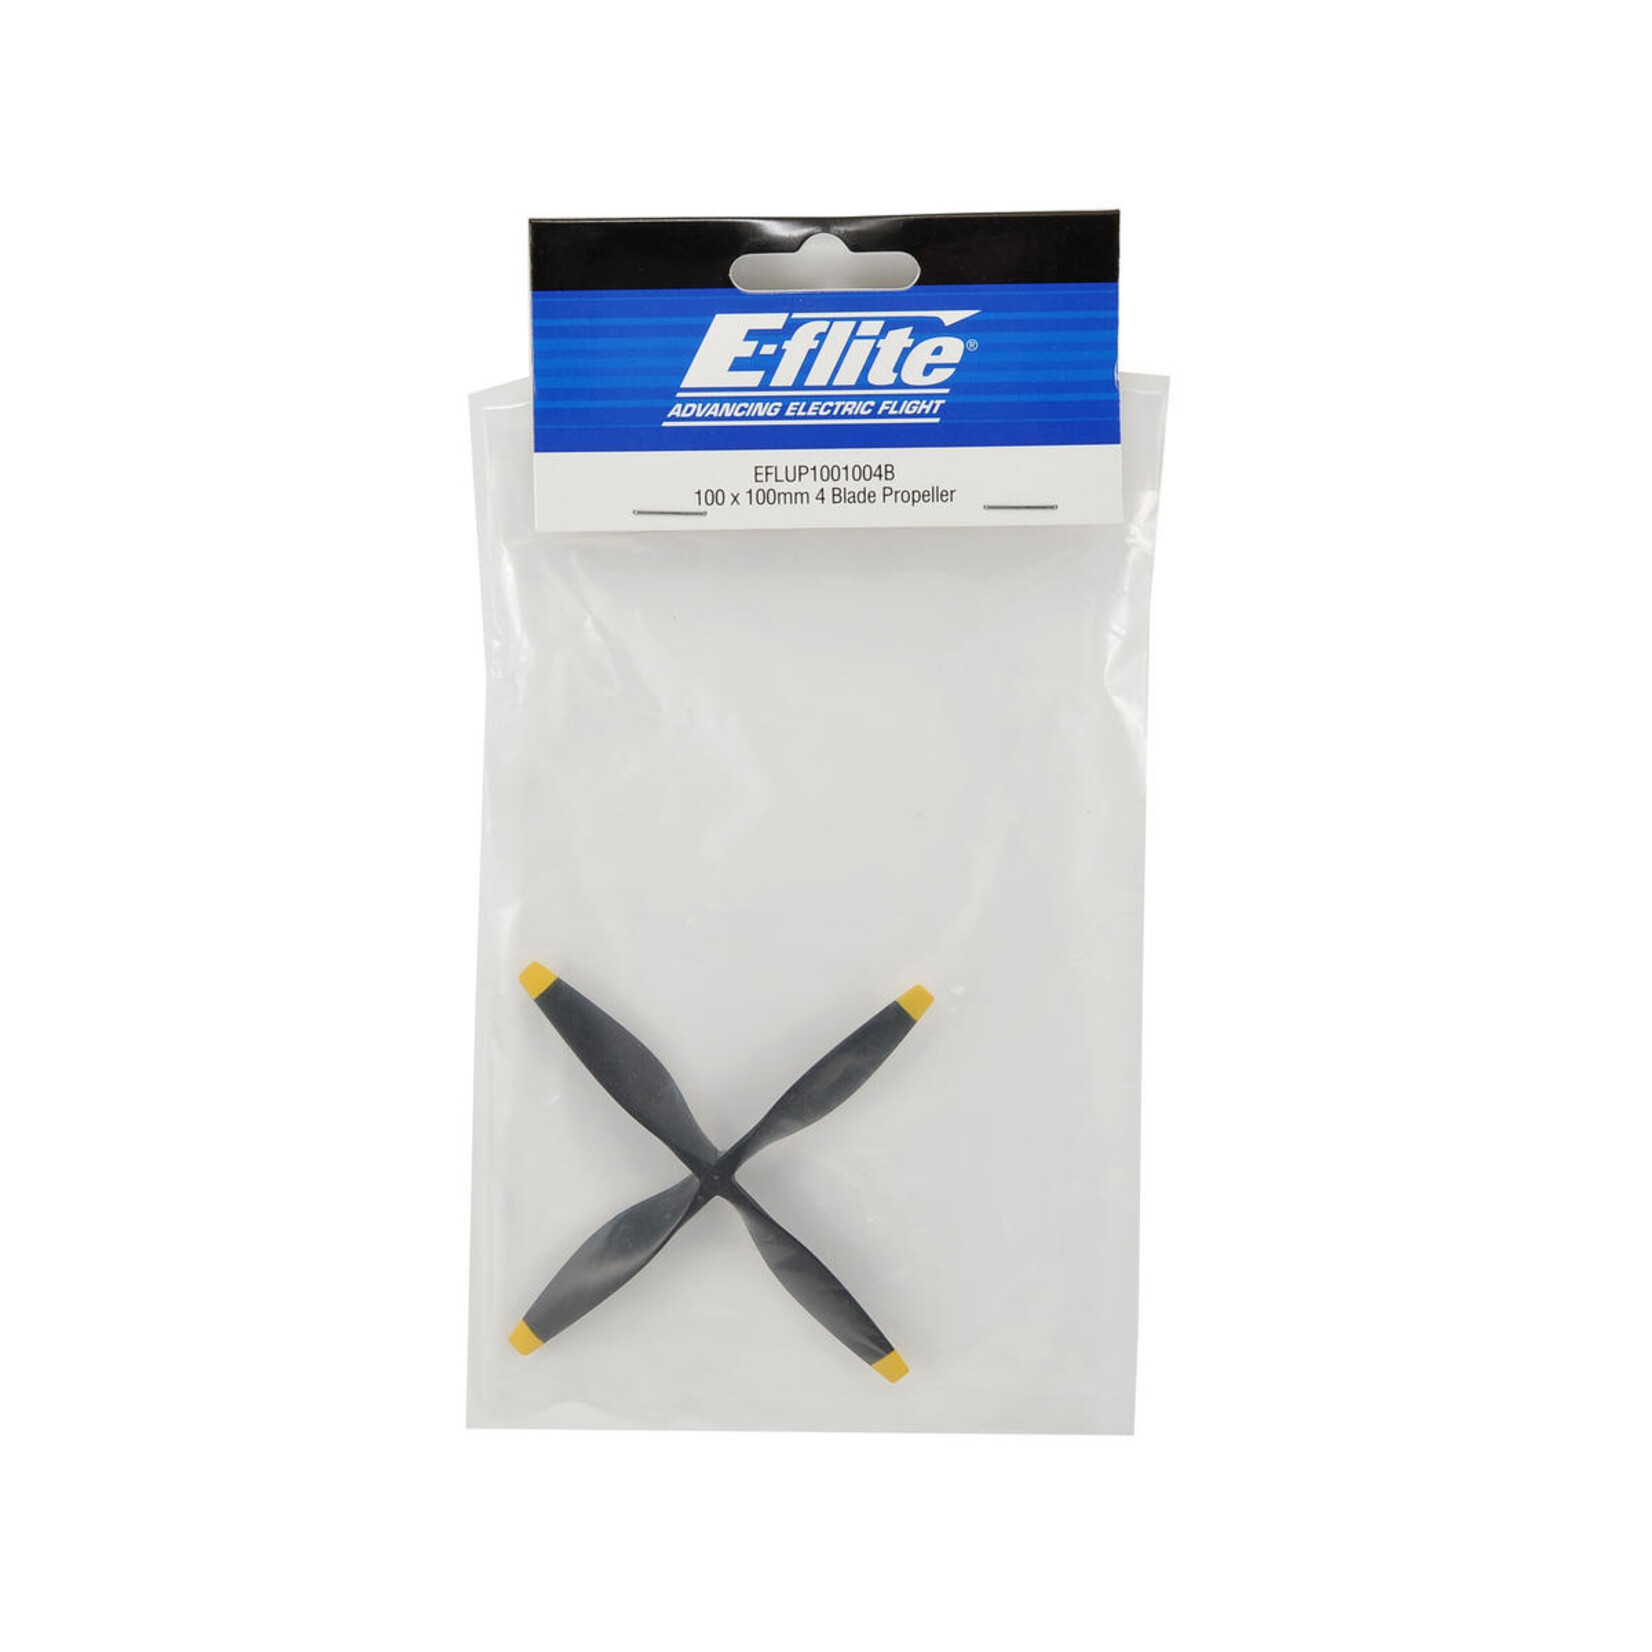 E-flite E-flite 100x100mm 4 Blade Propeller #EFLUP1001004B